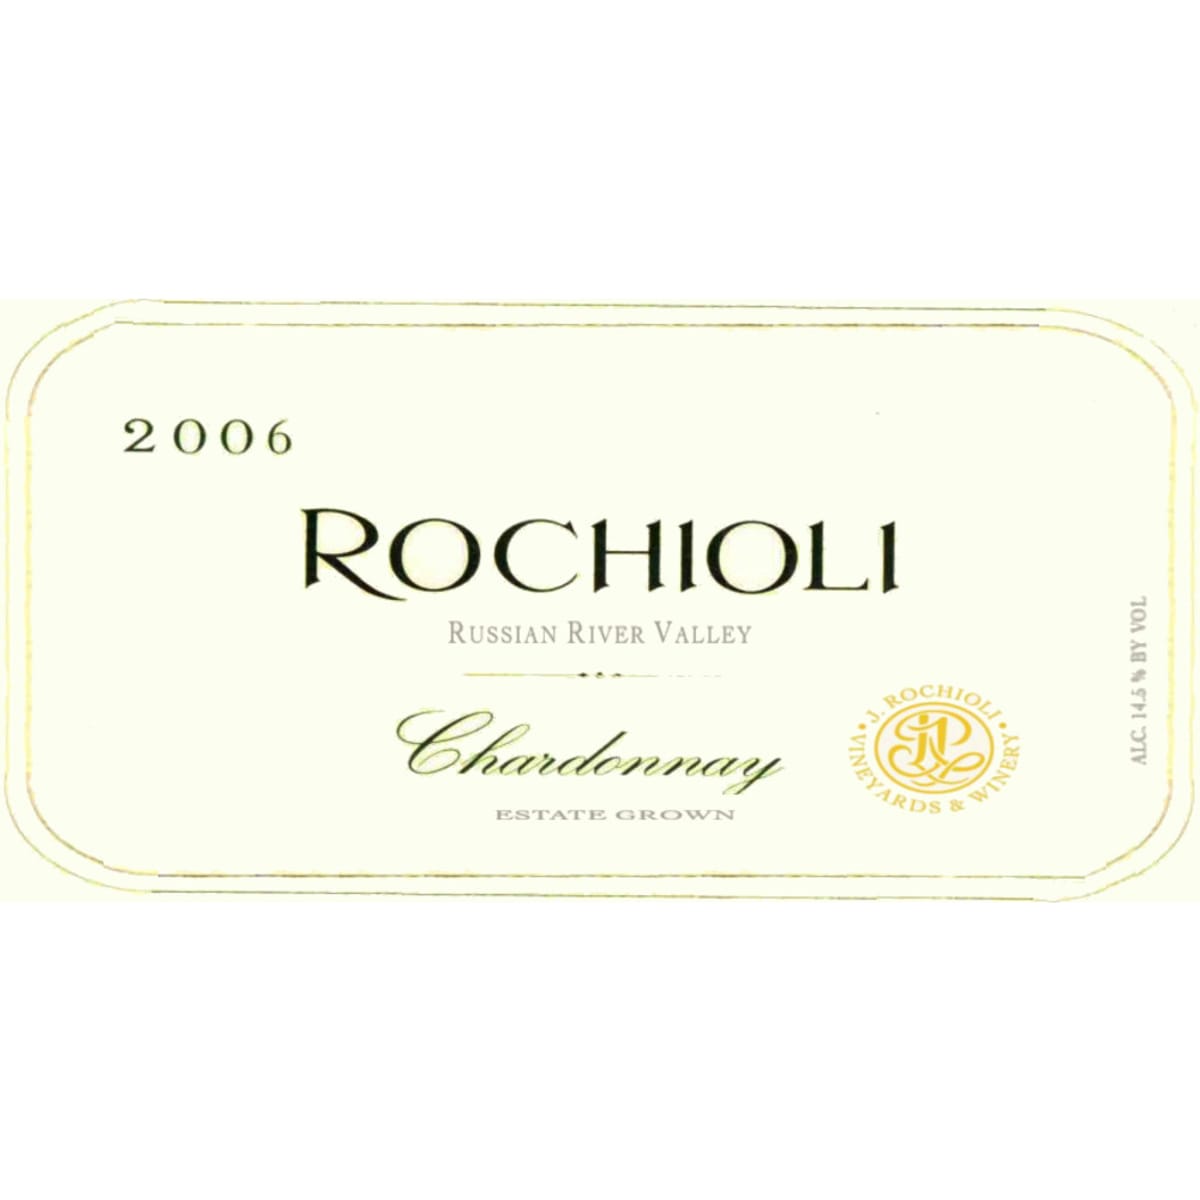 Rochioli Estate Chardonnay 2006 Front Label